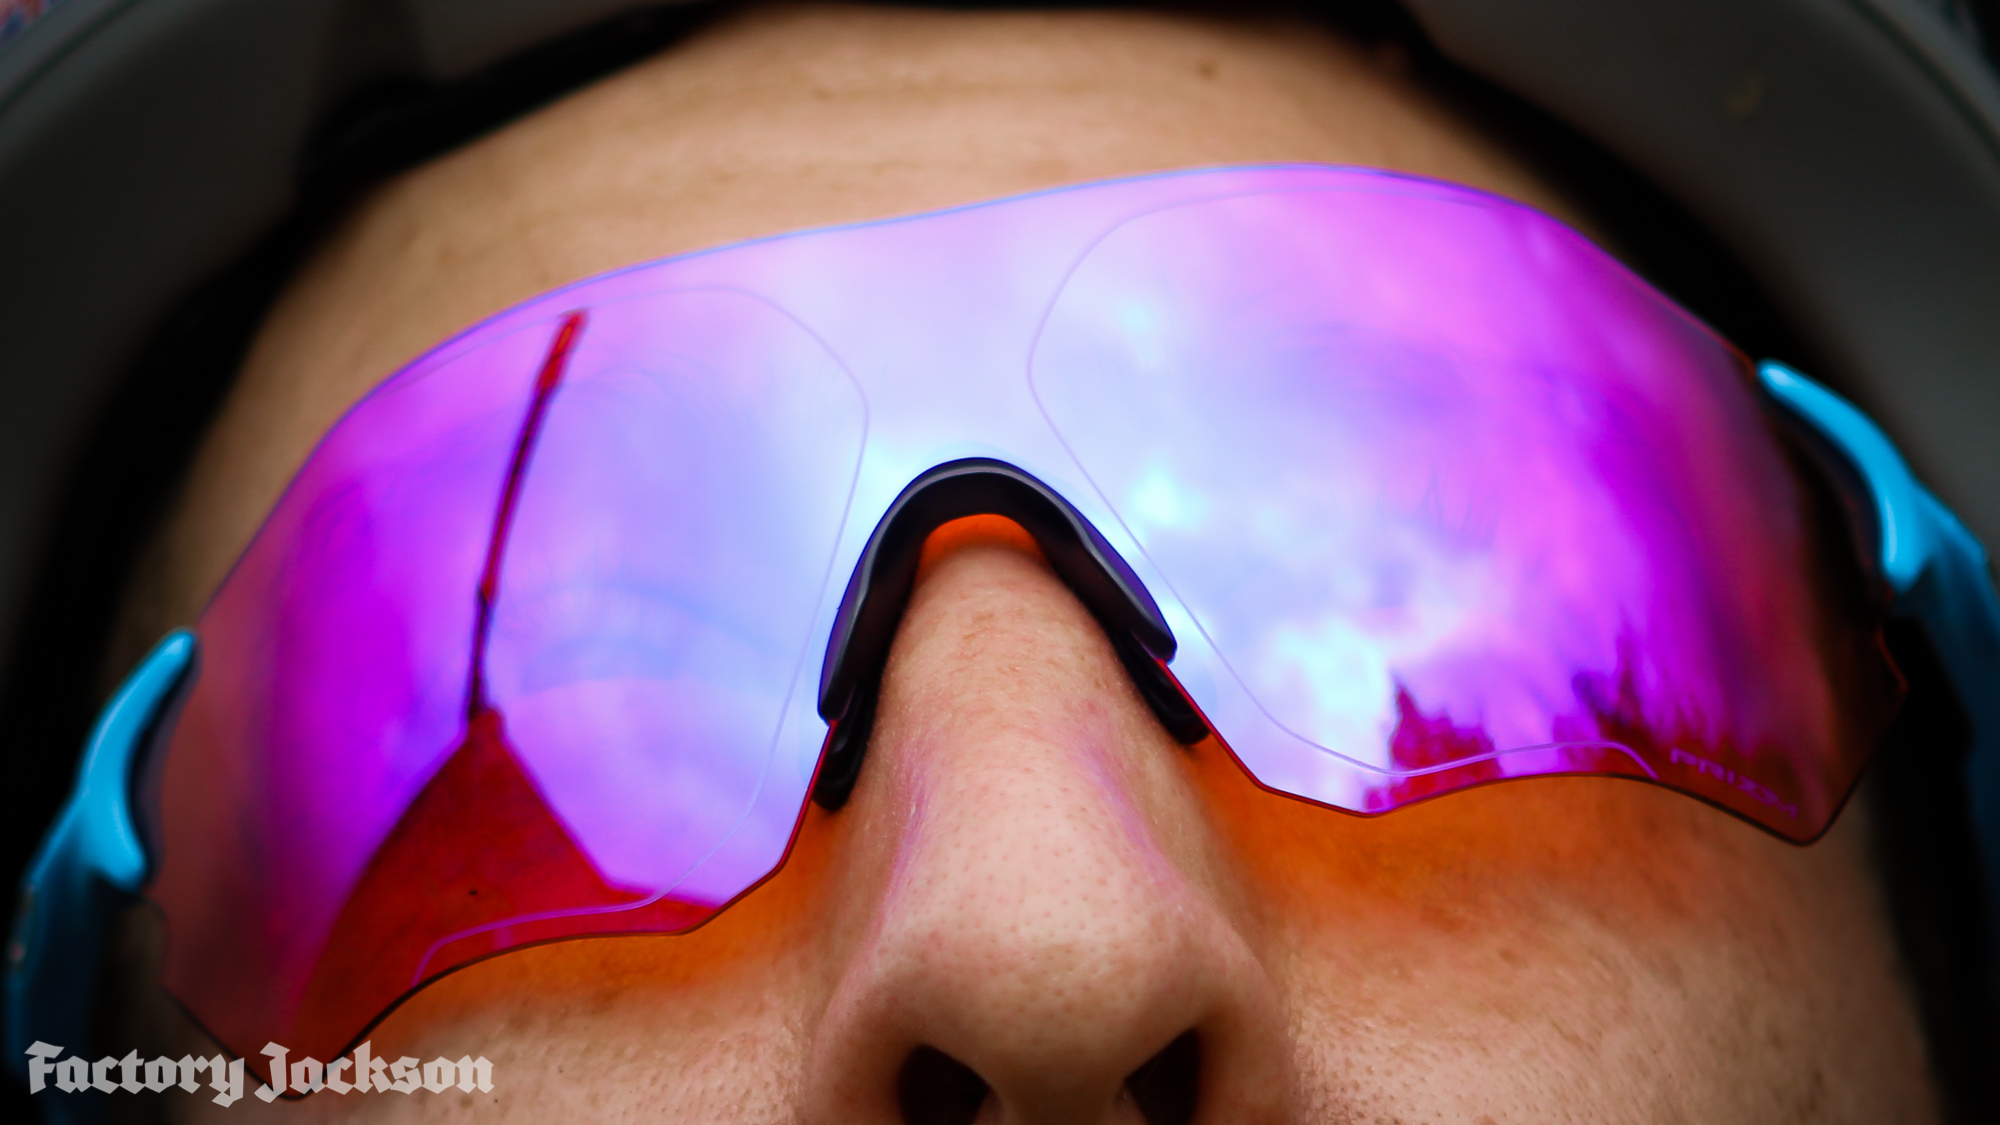 Oakley Prizm System Jawbreaker Sunglasses Review - Do They Work?